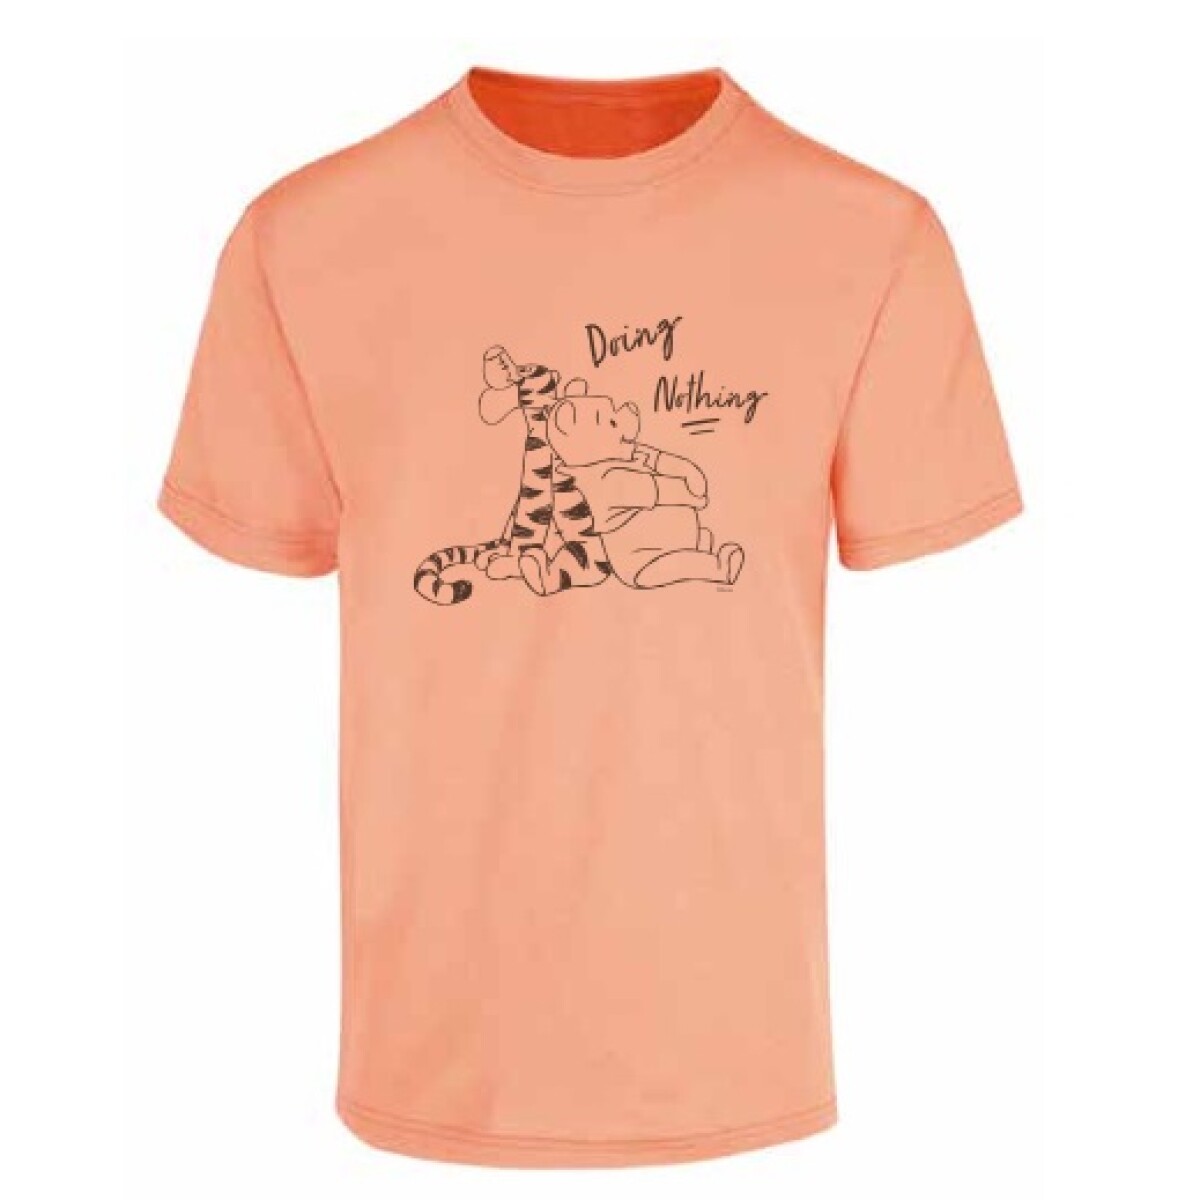 Camiseta Remera a la Base Disney Pooh Doing Nothing - CORAL 